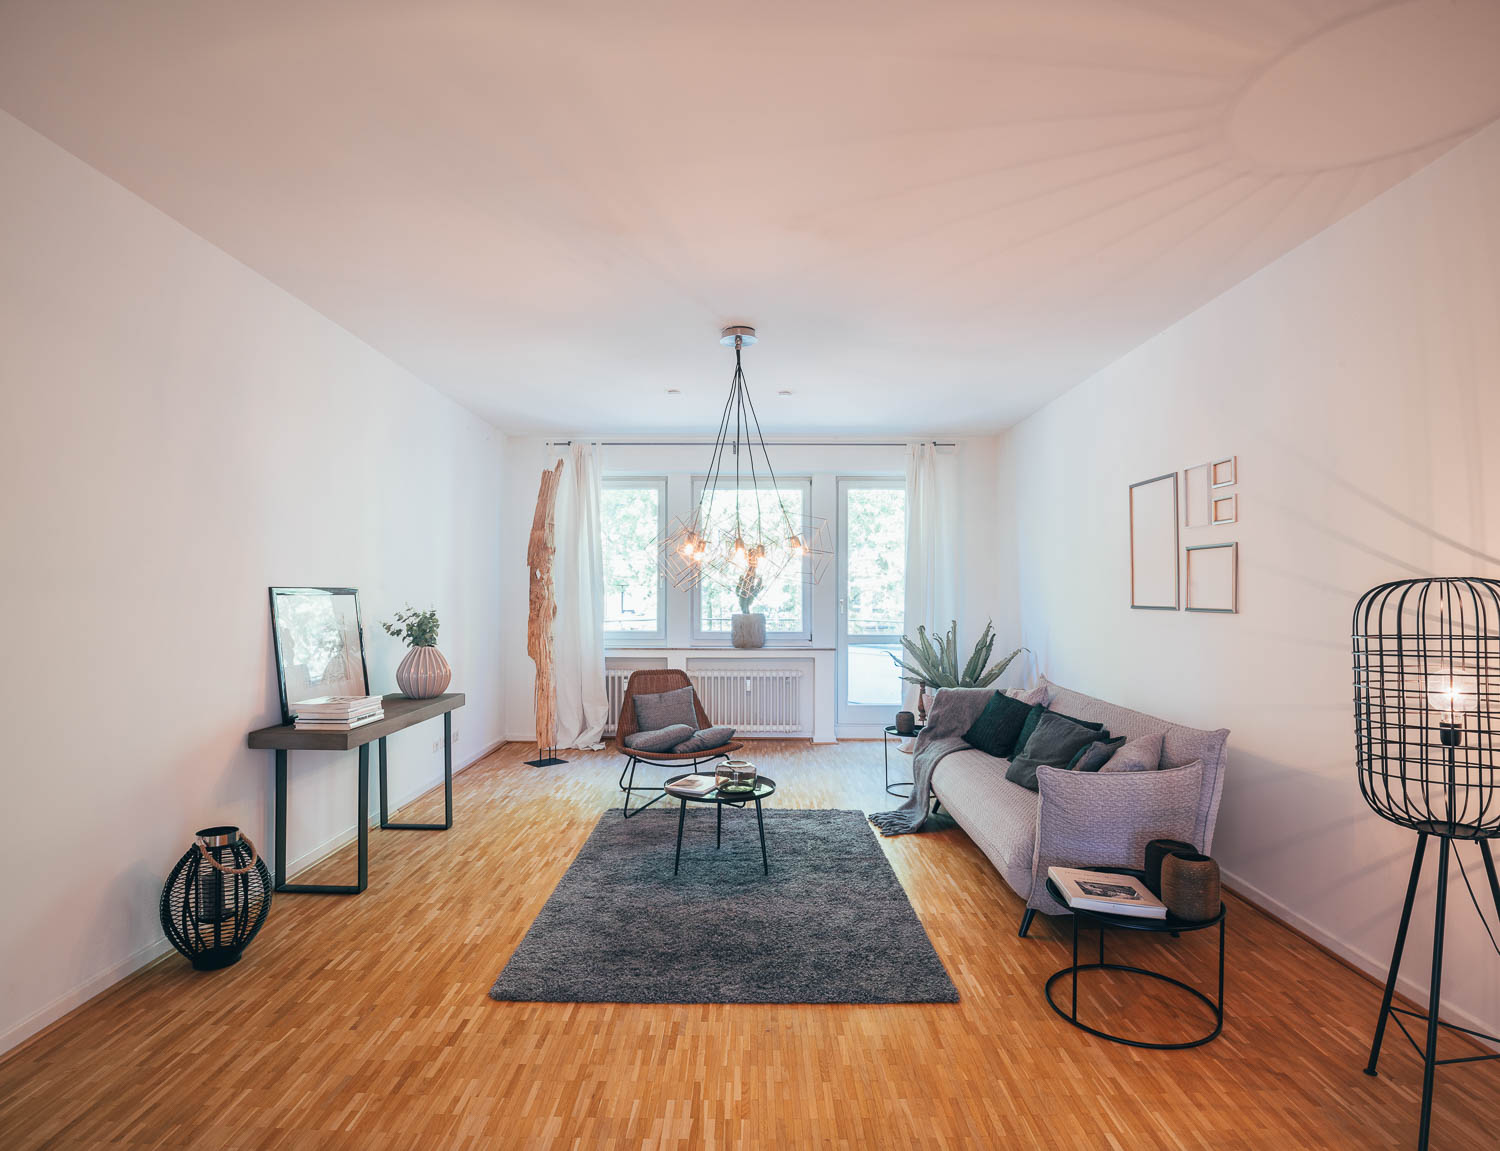 Immobilien Fotograf in Düsseldorf | Erfolgskomponente ‘Home Staging‘